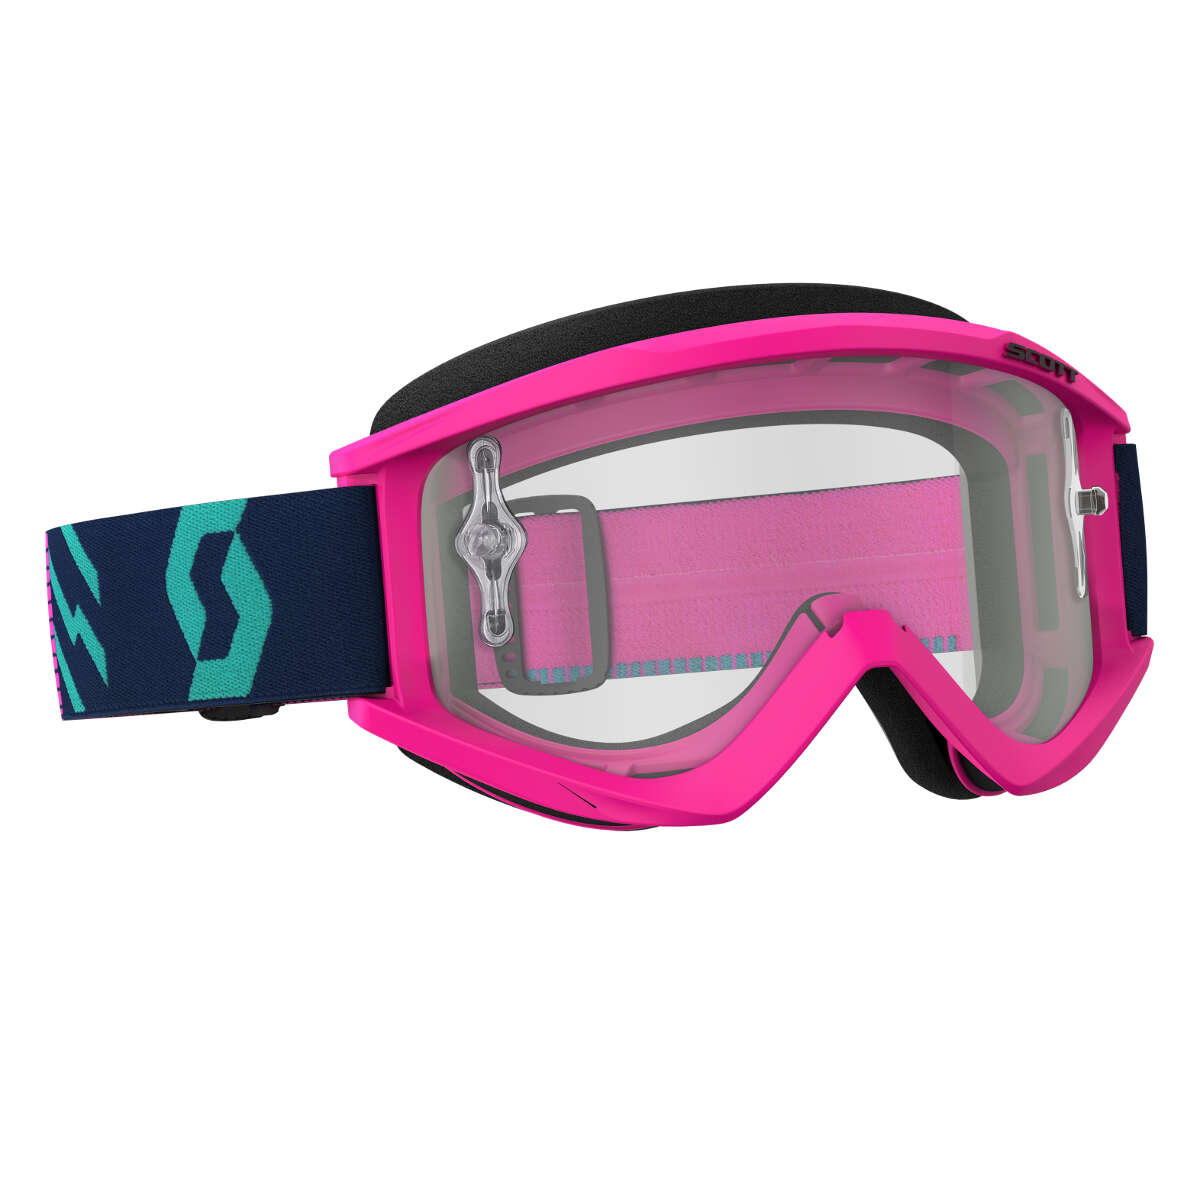 Scott Goggle Recoil Xi Pink/Teal - Clear Works Anti-Fog